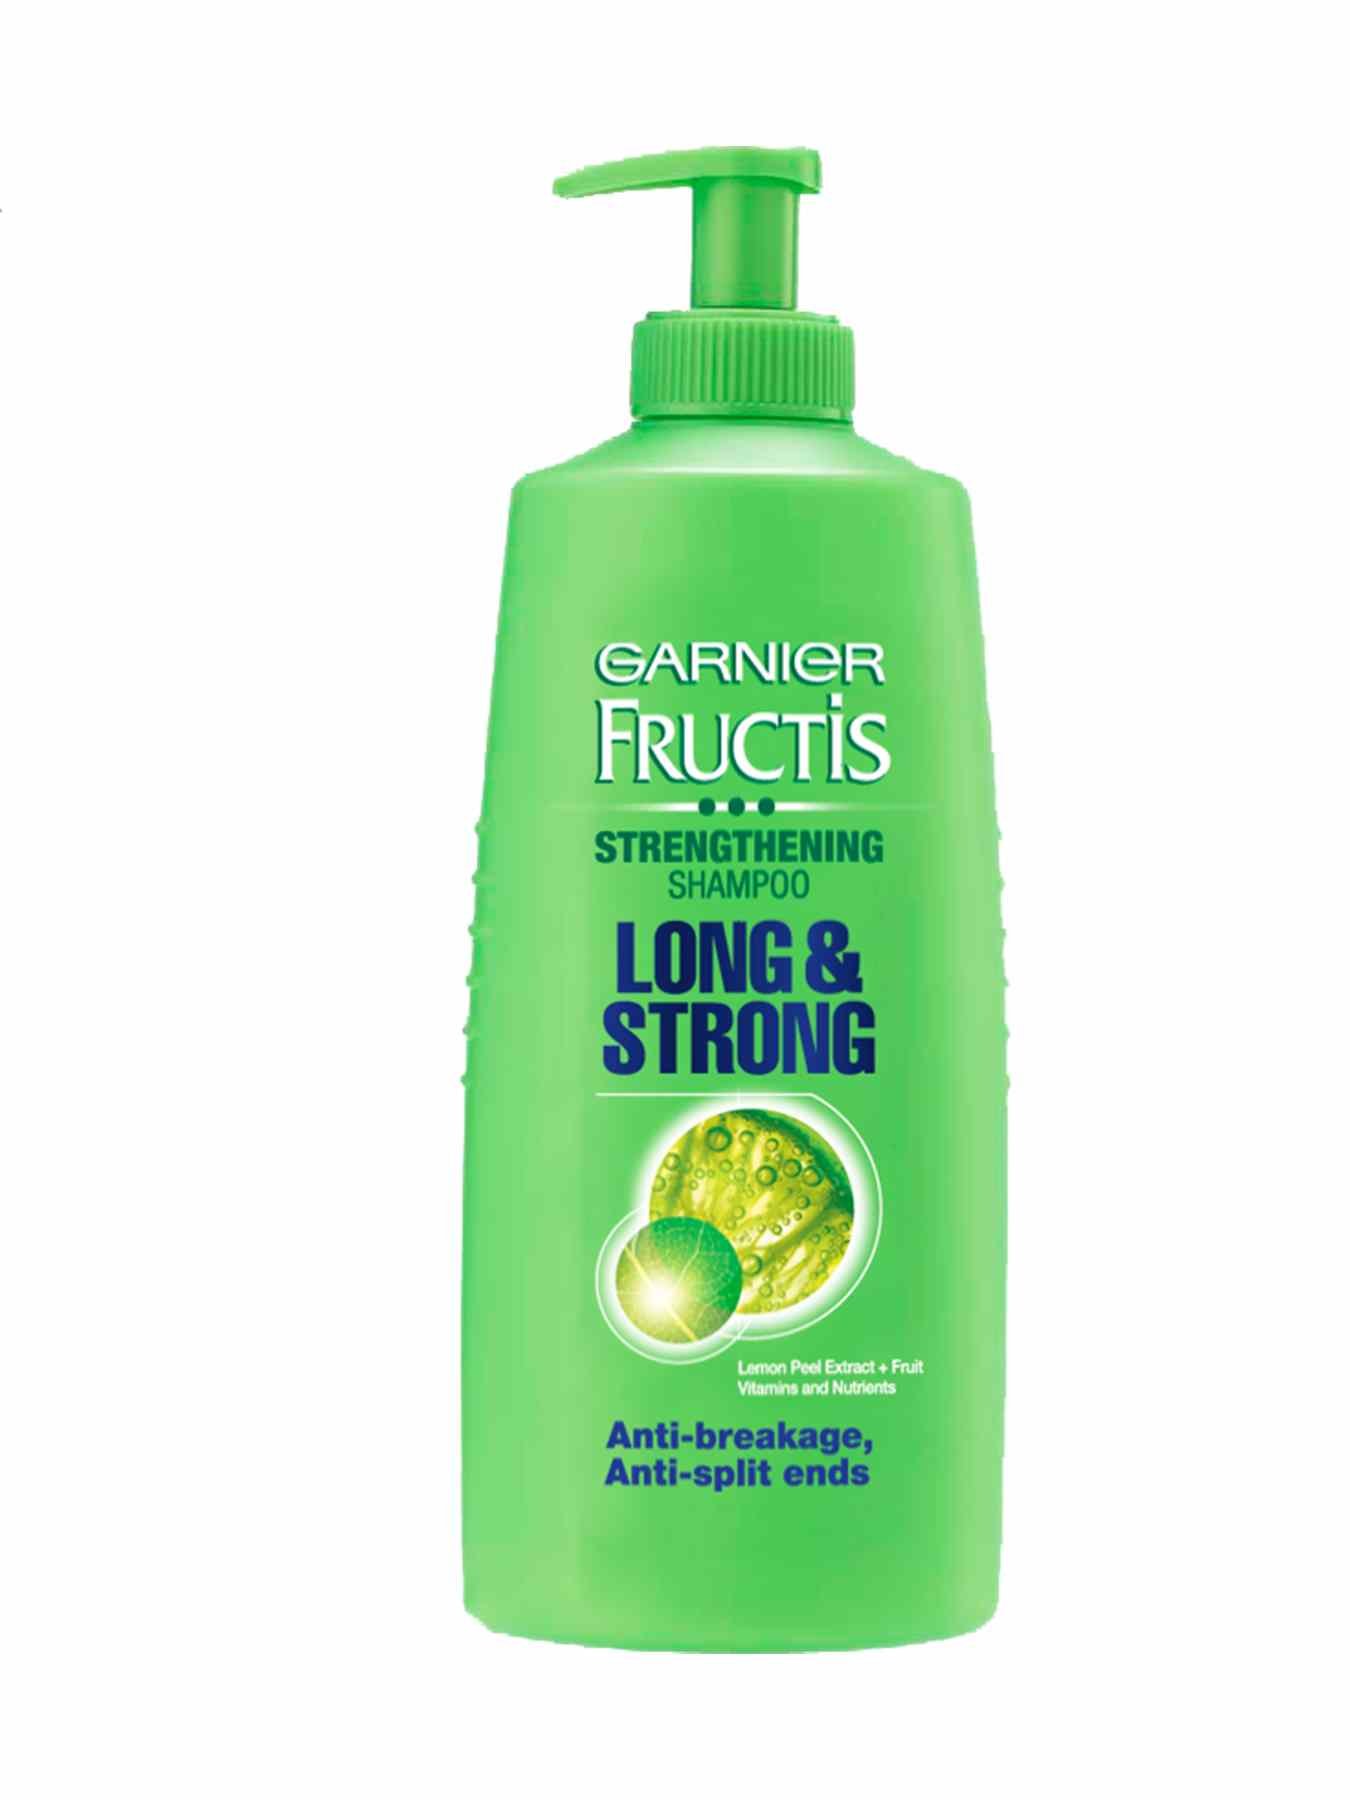 Garnier Fructis Long & Strong Shampoo 640ml